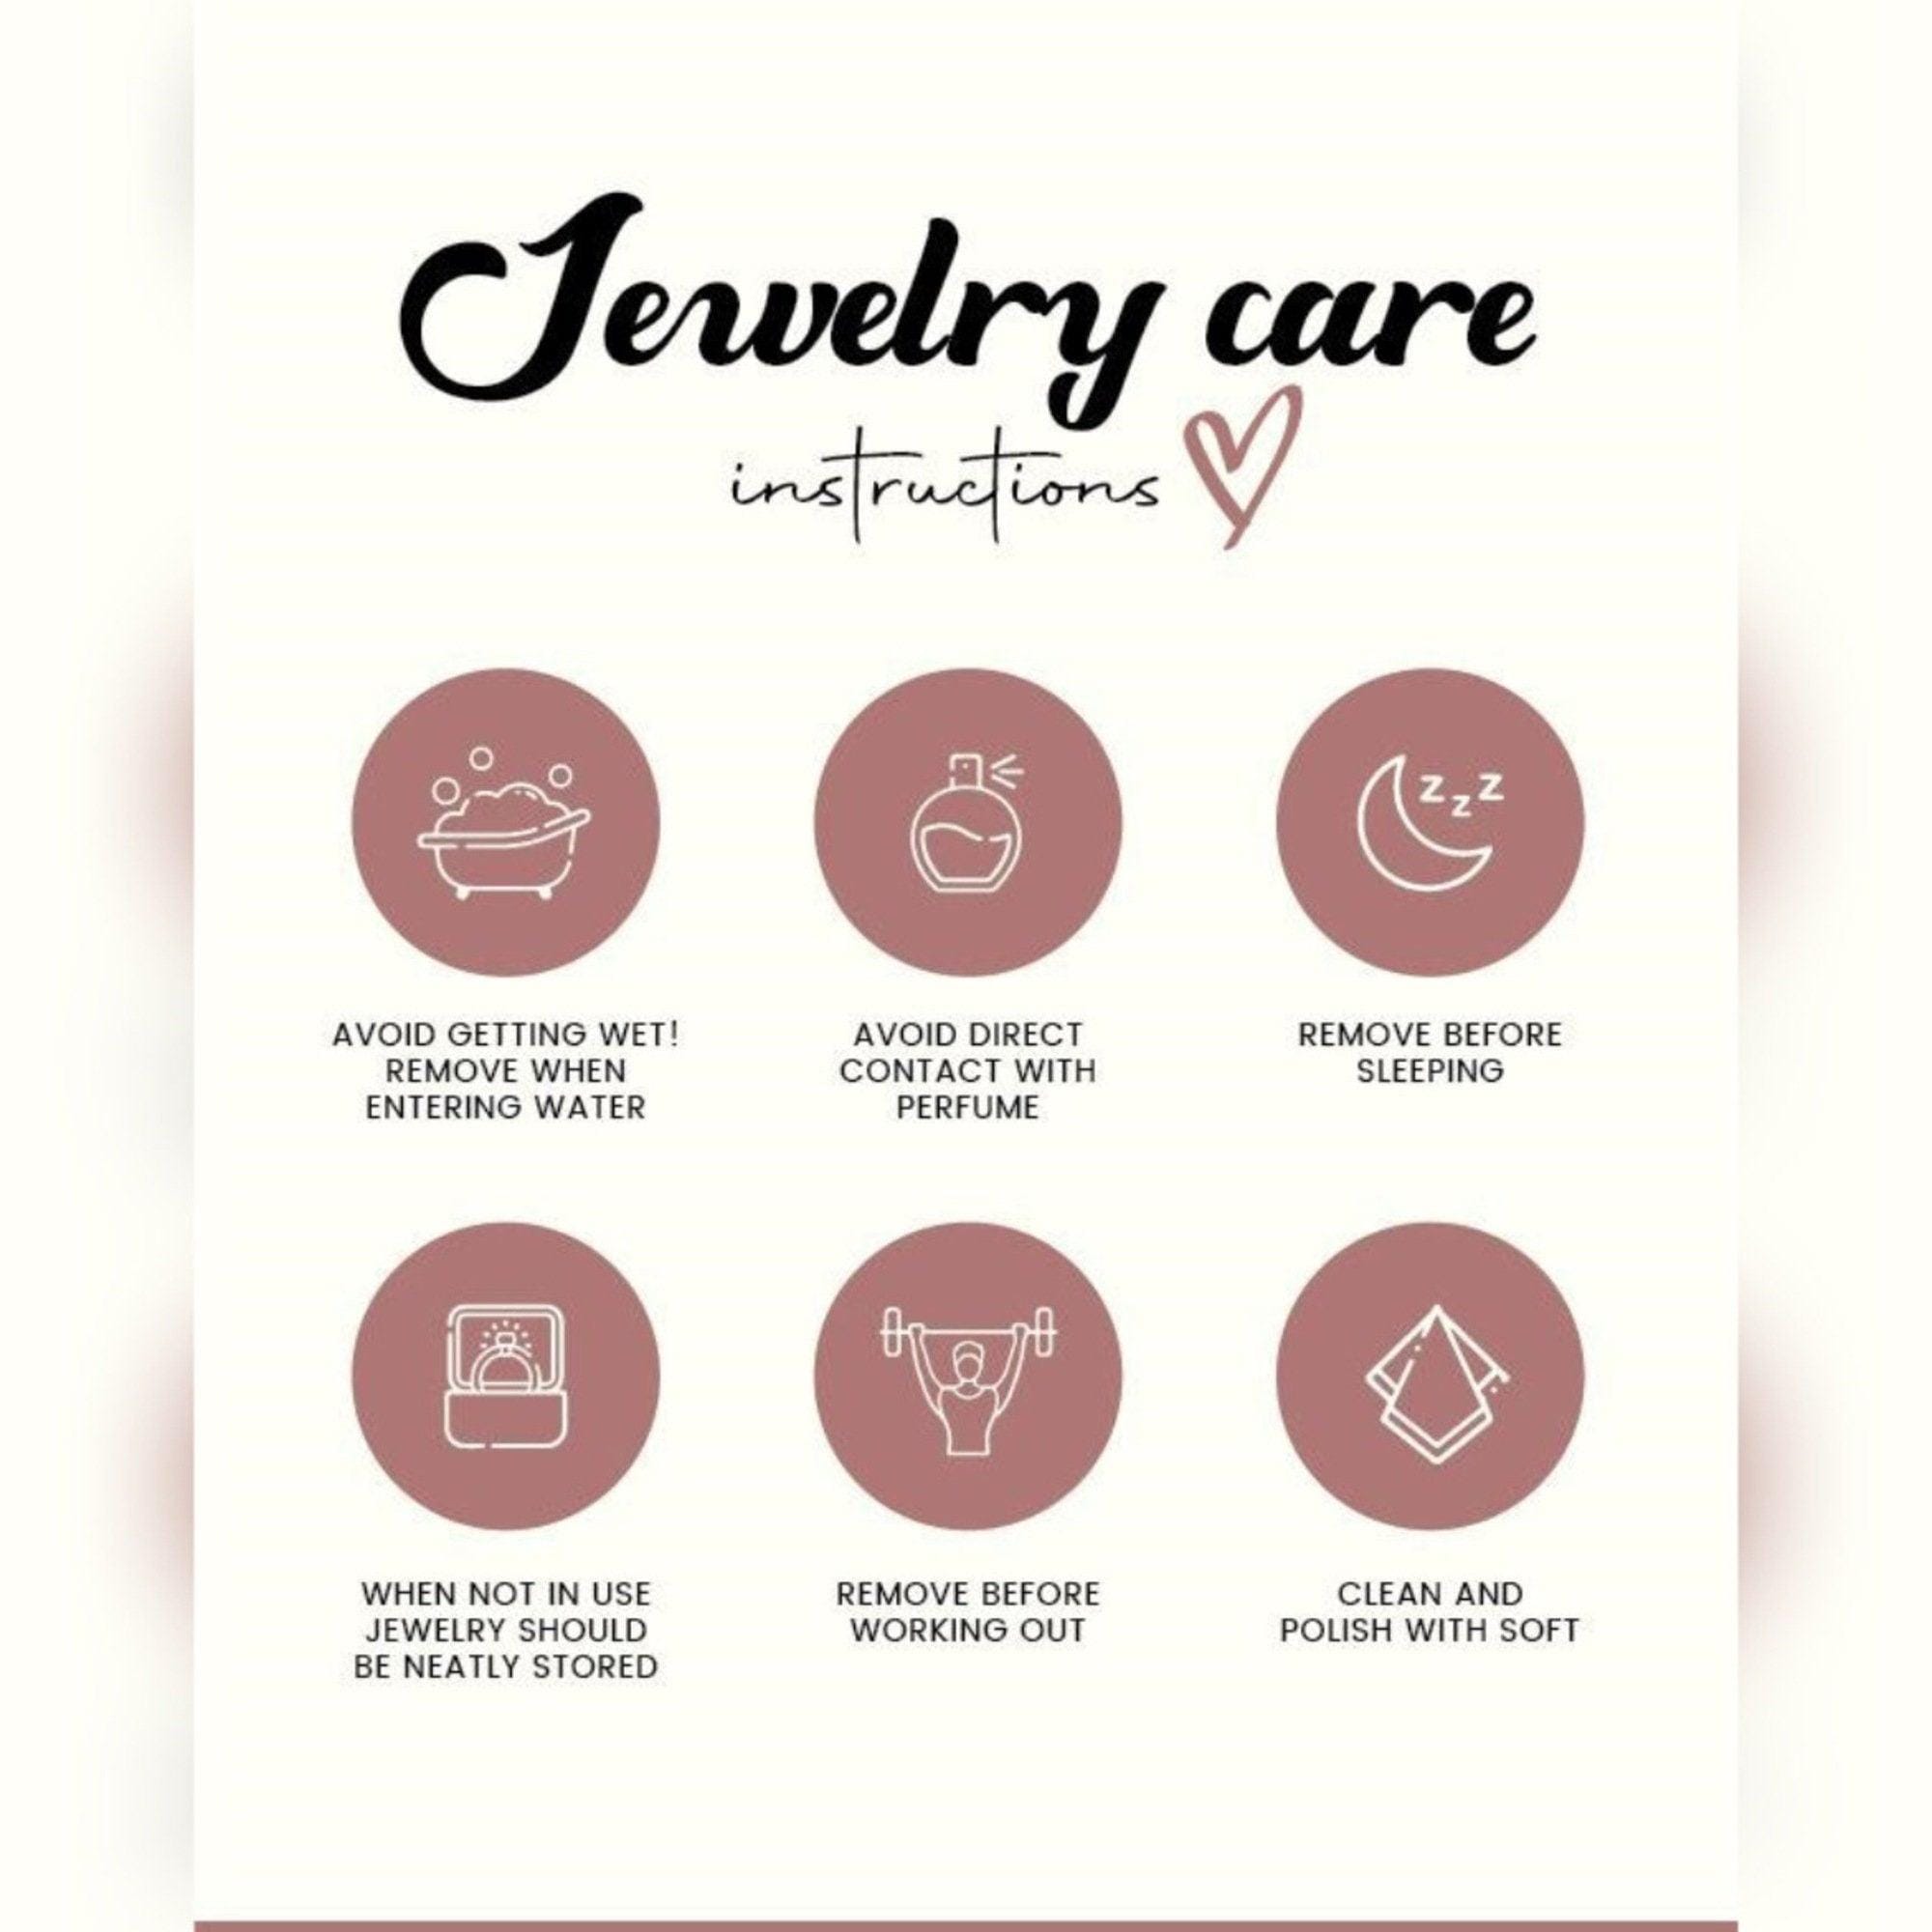 Meditation Ring | Multistone Ring | Natural Seven Gemstones | Rainbow Ring | Spiritual Yoga Jewelry | 7 Chakra Ring | Gift For Her - Silverhubjewels